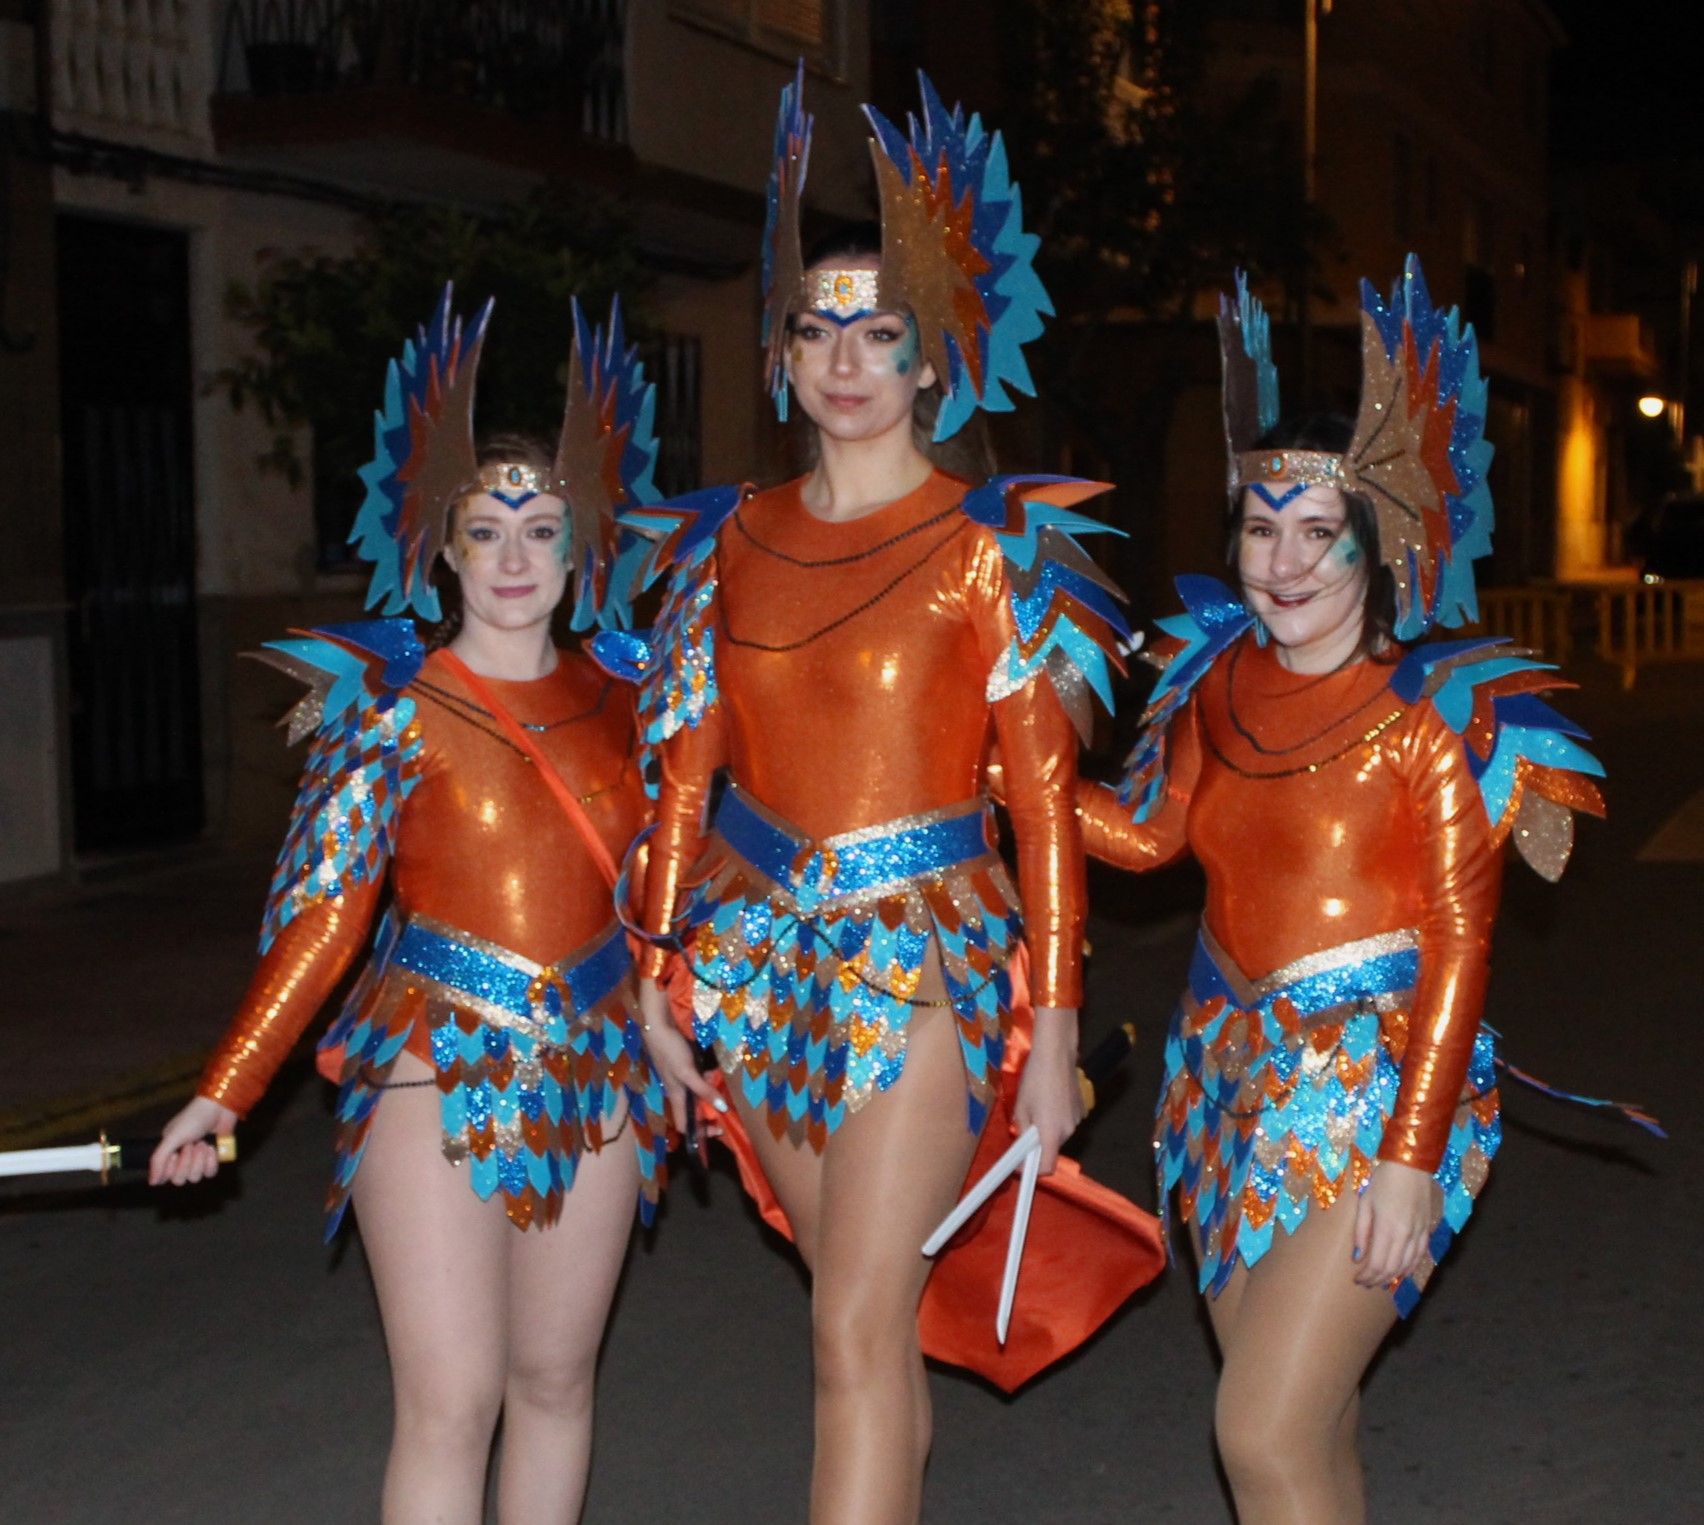 El desfile del Carnaval de Alcalà de Xivert, en imágenes